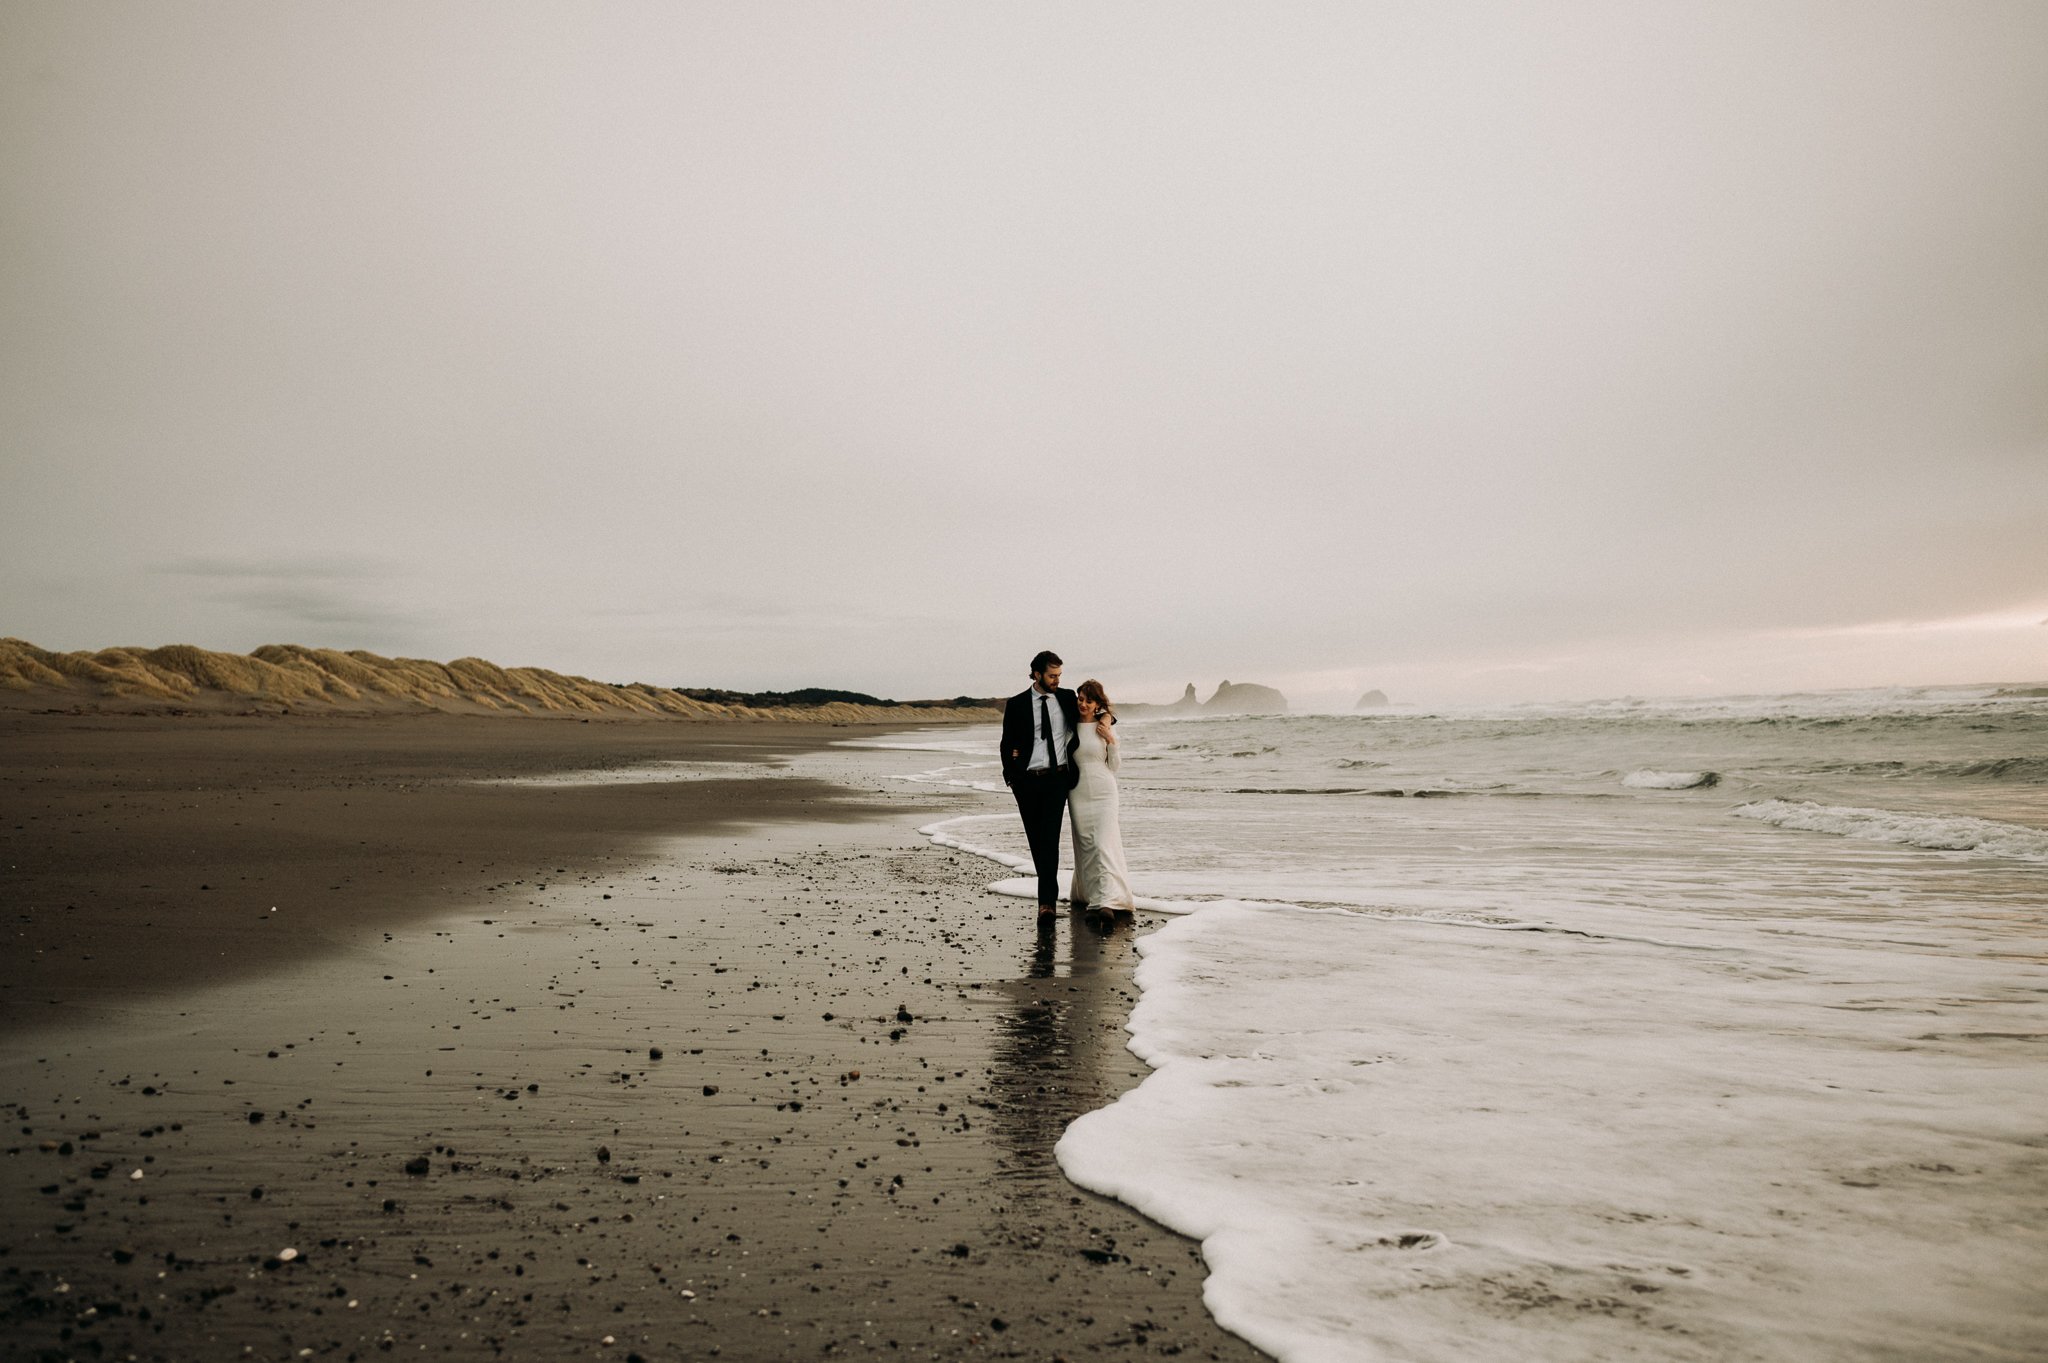 Bride and groom in wedding attire walking along the shore break after wedding ceremony.